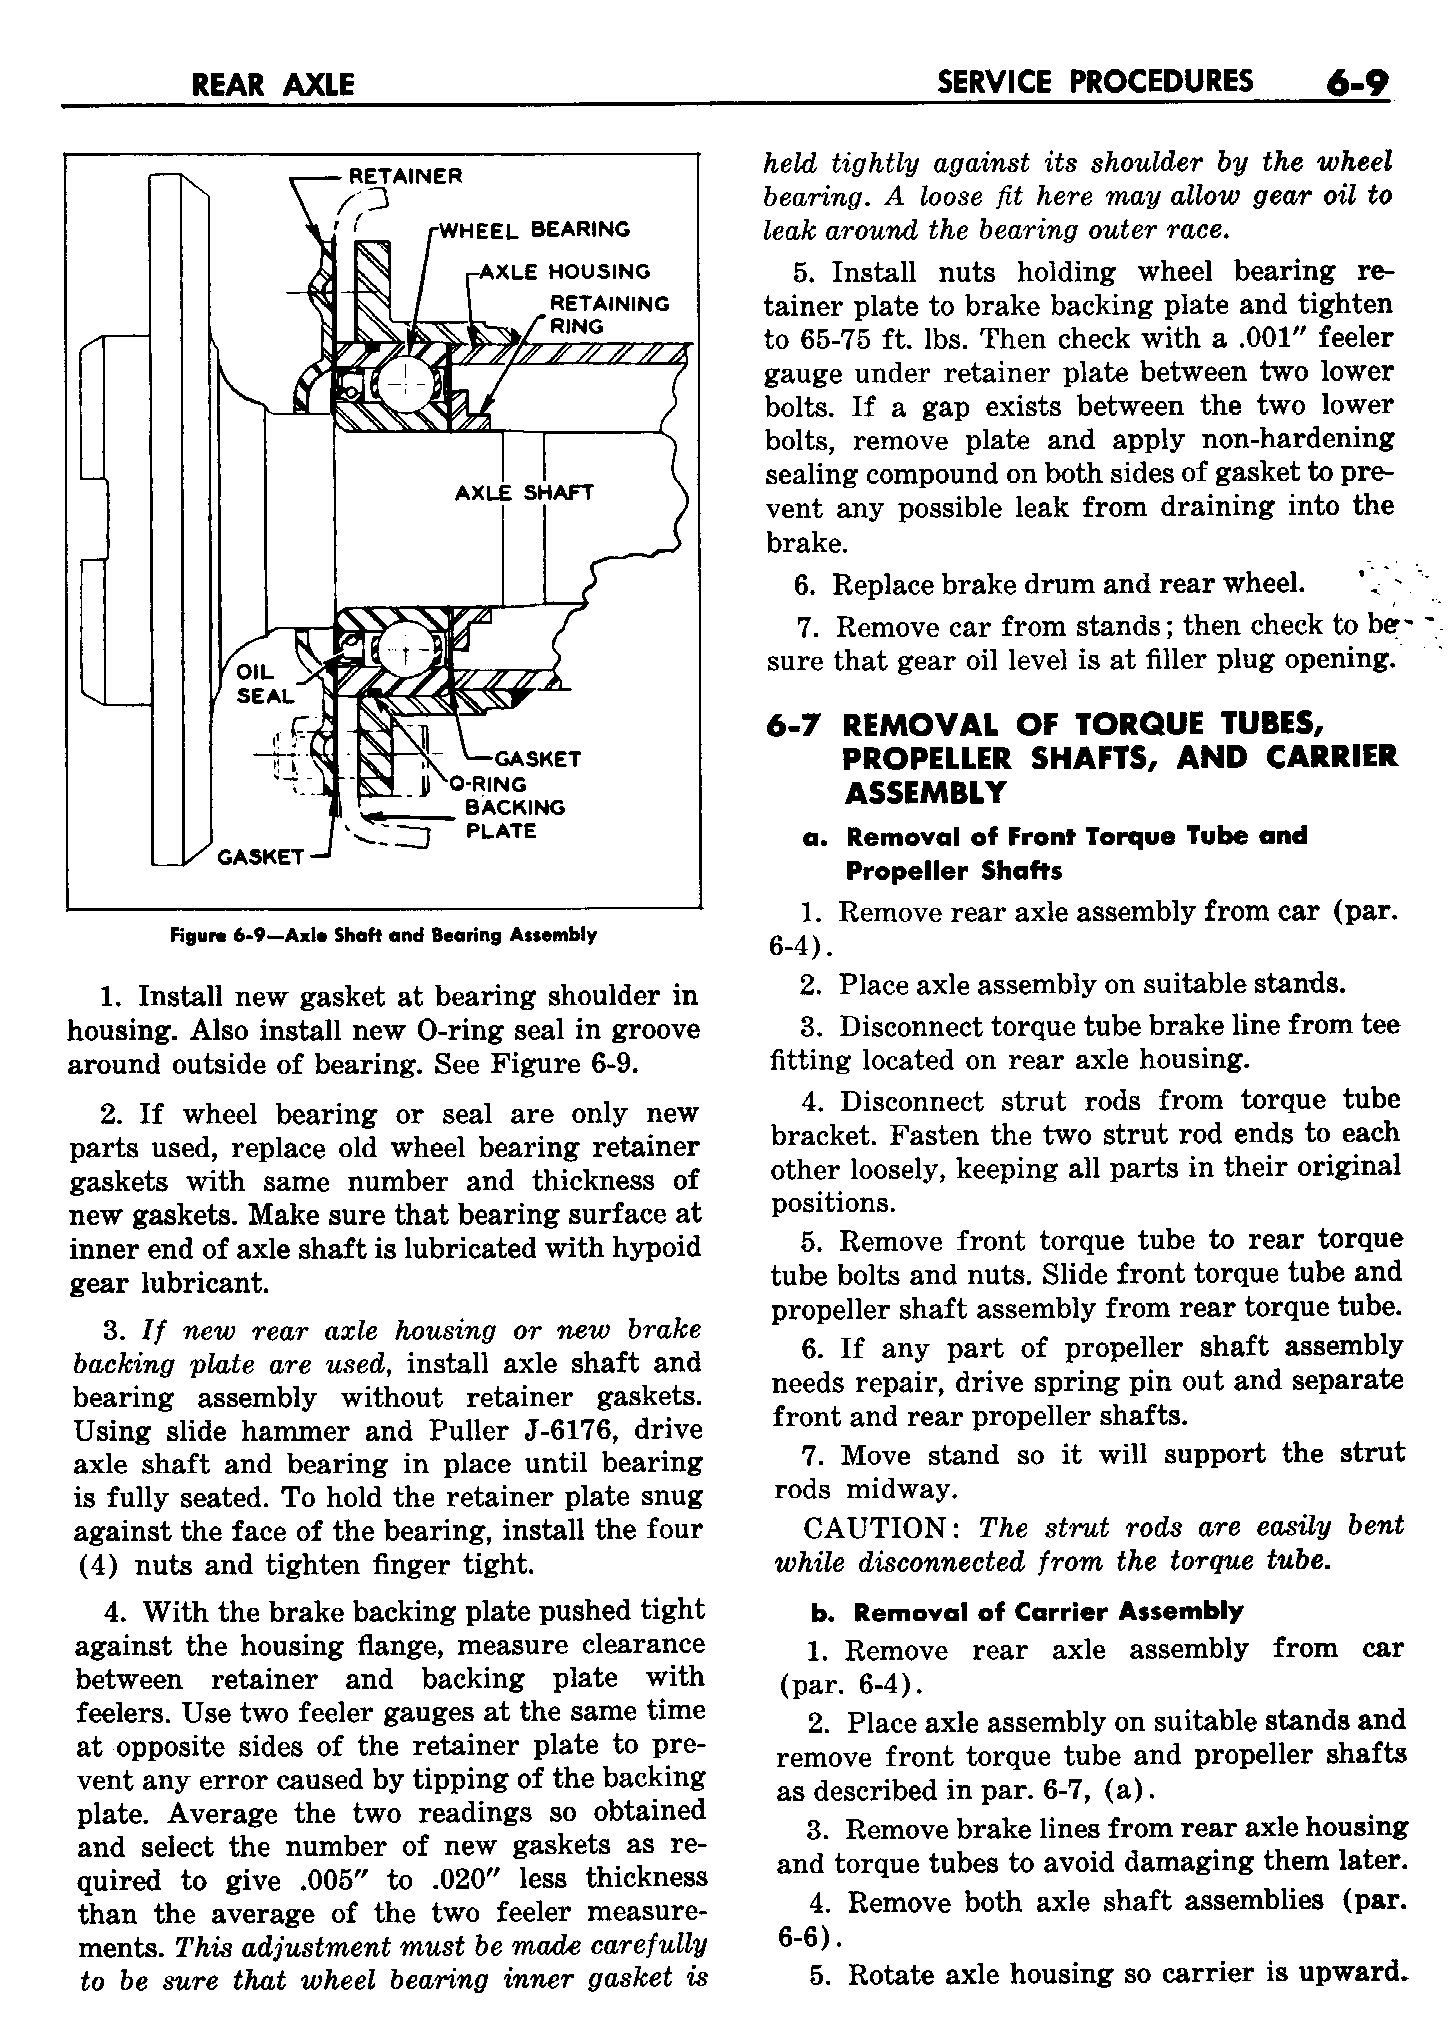 n_07 1958 Buick Shop Manual - Rear Axle_9.jpg